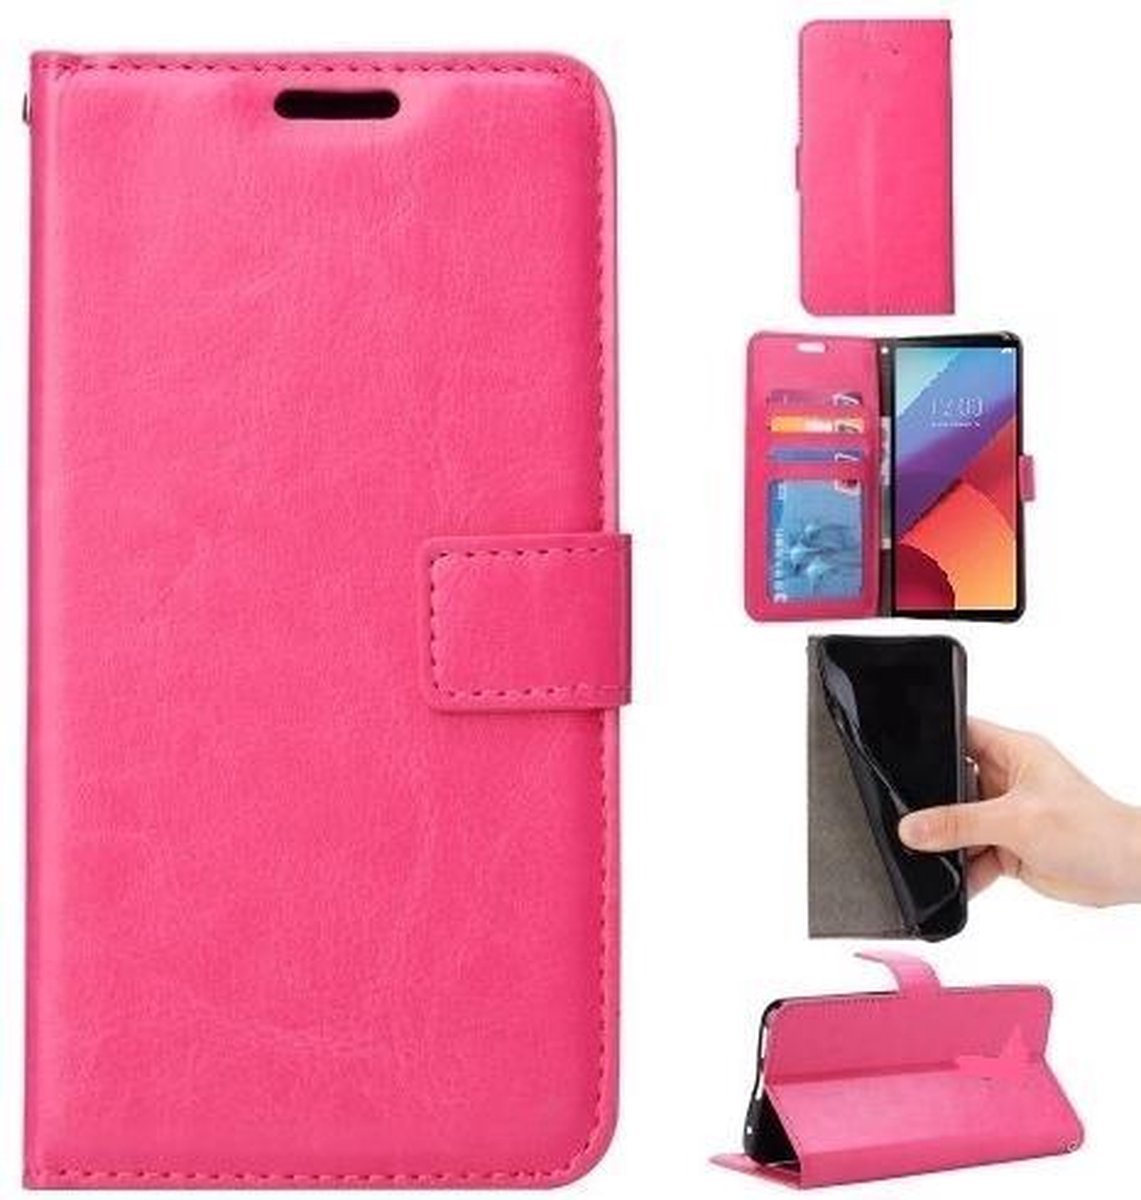 Nokia 3 Book PU lederen Portemonnee hoesje Book case roze